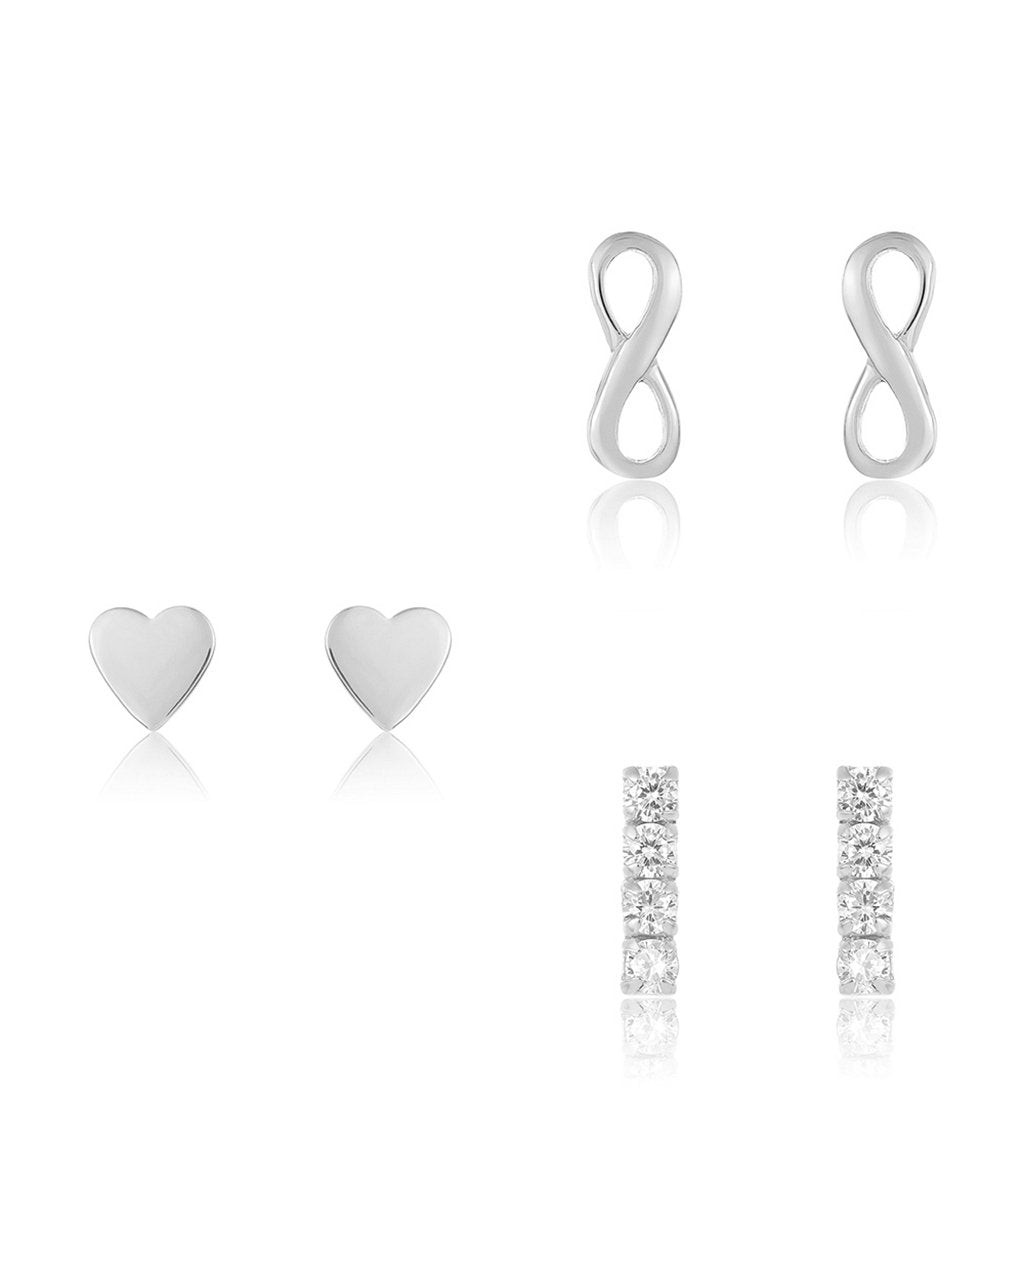 Sterling Silver Heart & Infinity Earring Set of 3 - Sterling Forever